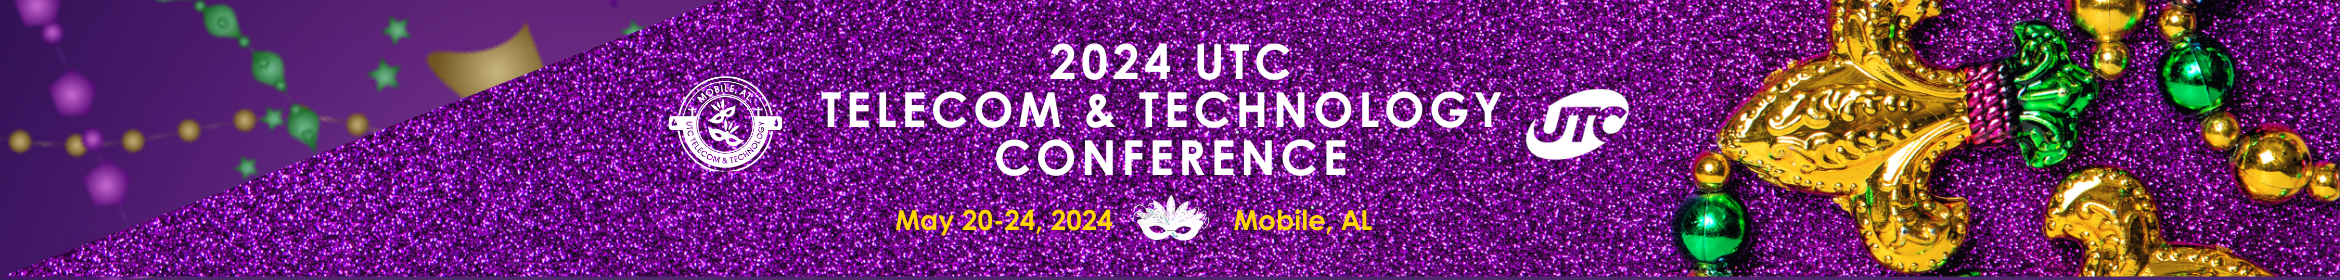 2024 UTC Telecom & Technology Conference Main banner